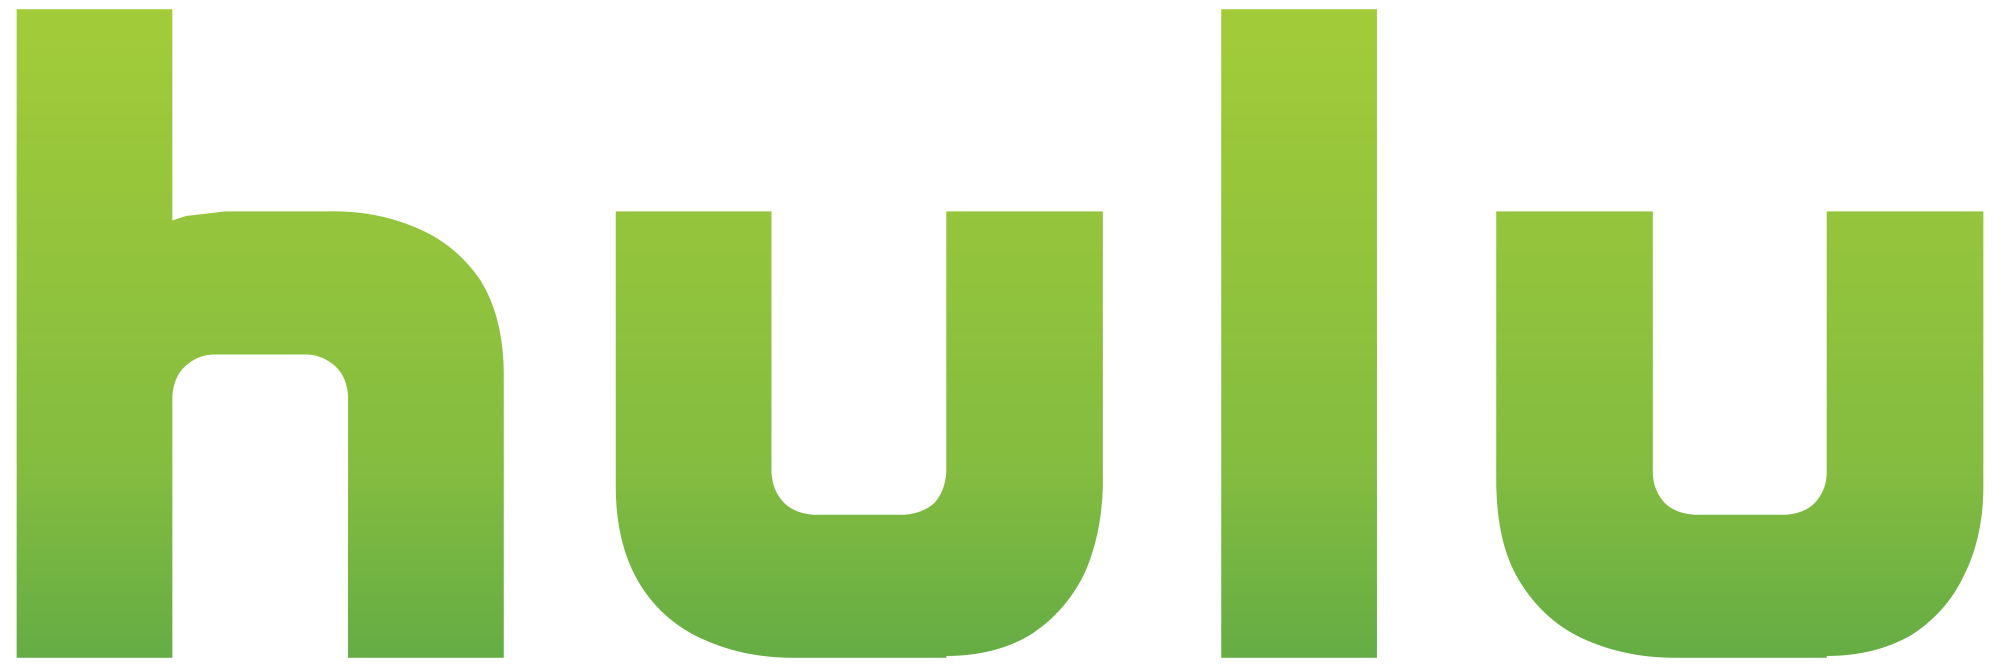 hulu-logo1.png